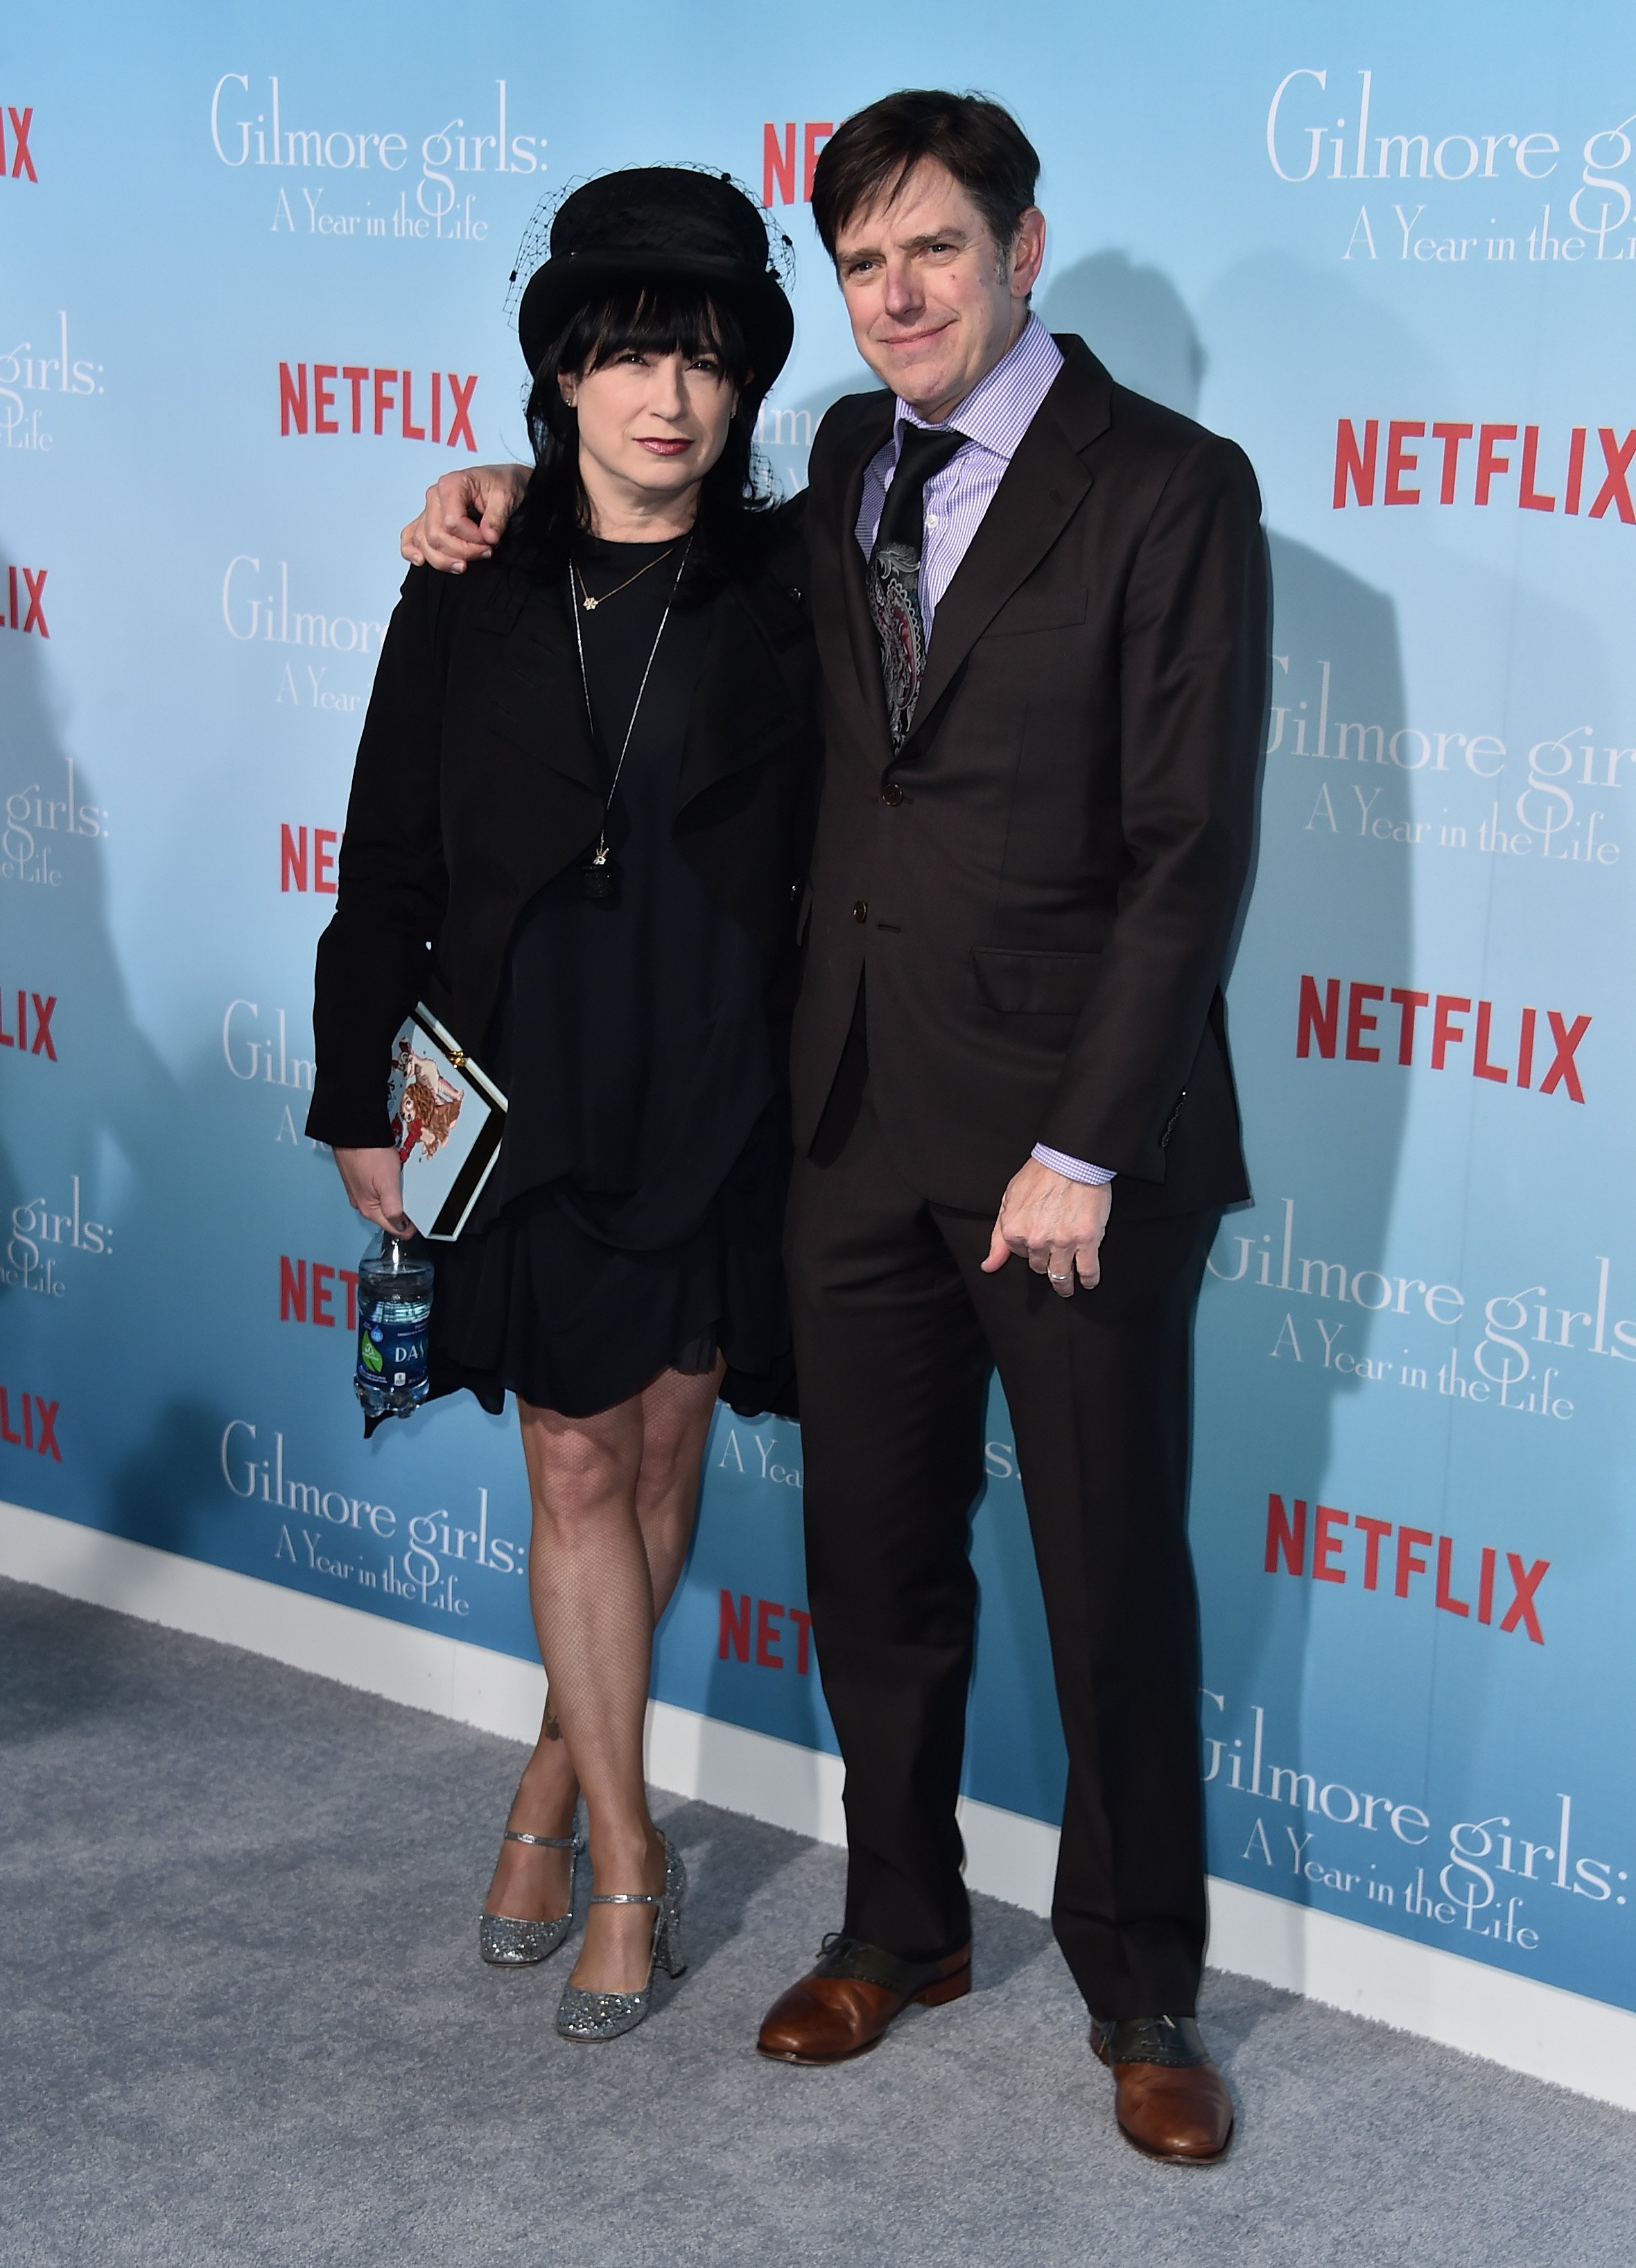 Amy Sherman-Palladino and Daniel Palladino attend 'Gilmore Girls: A Year in the Life' premiere